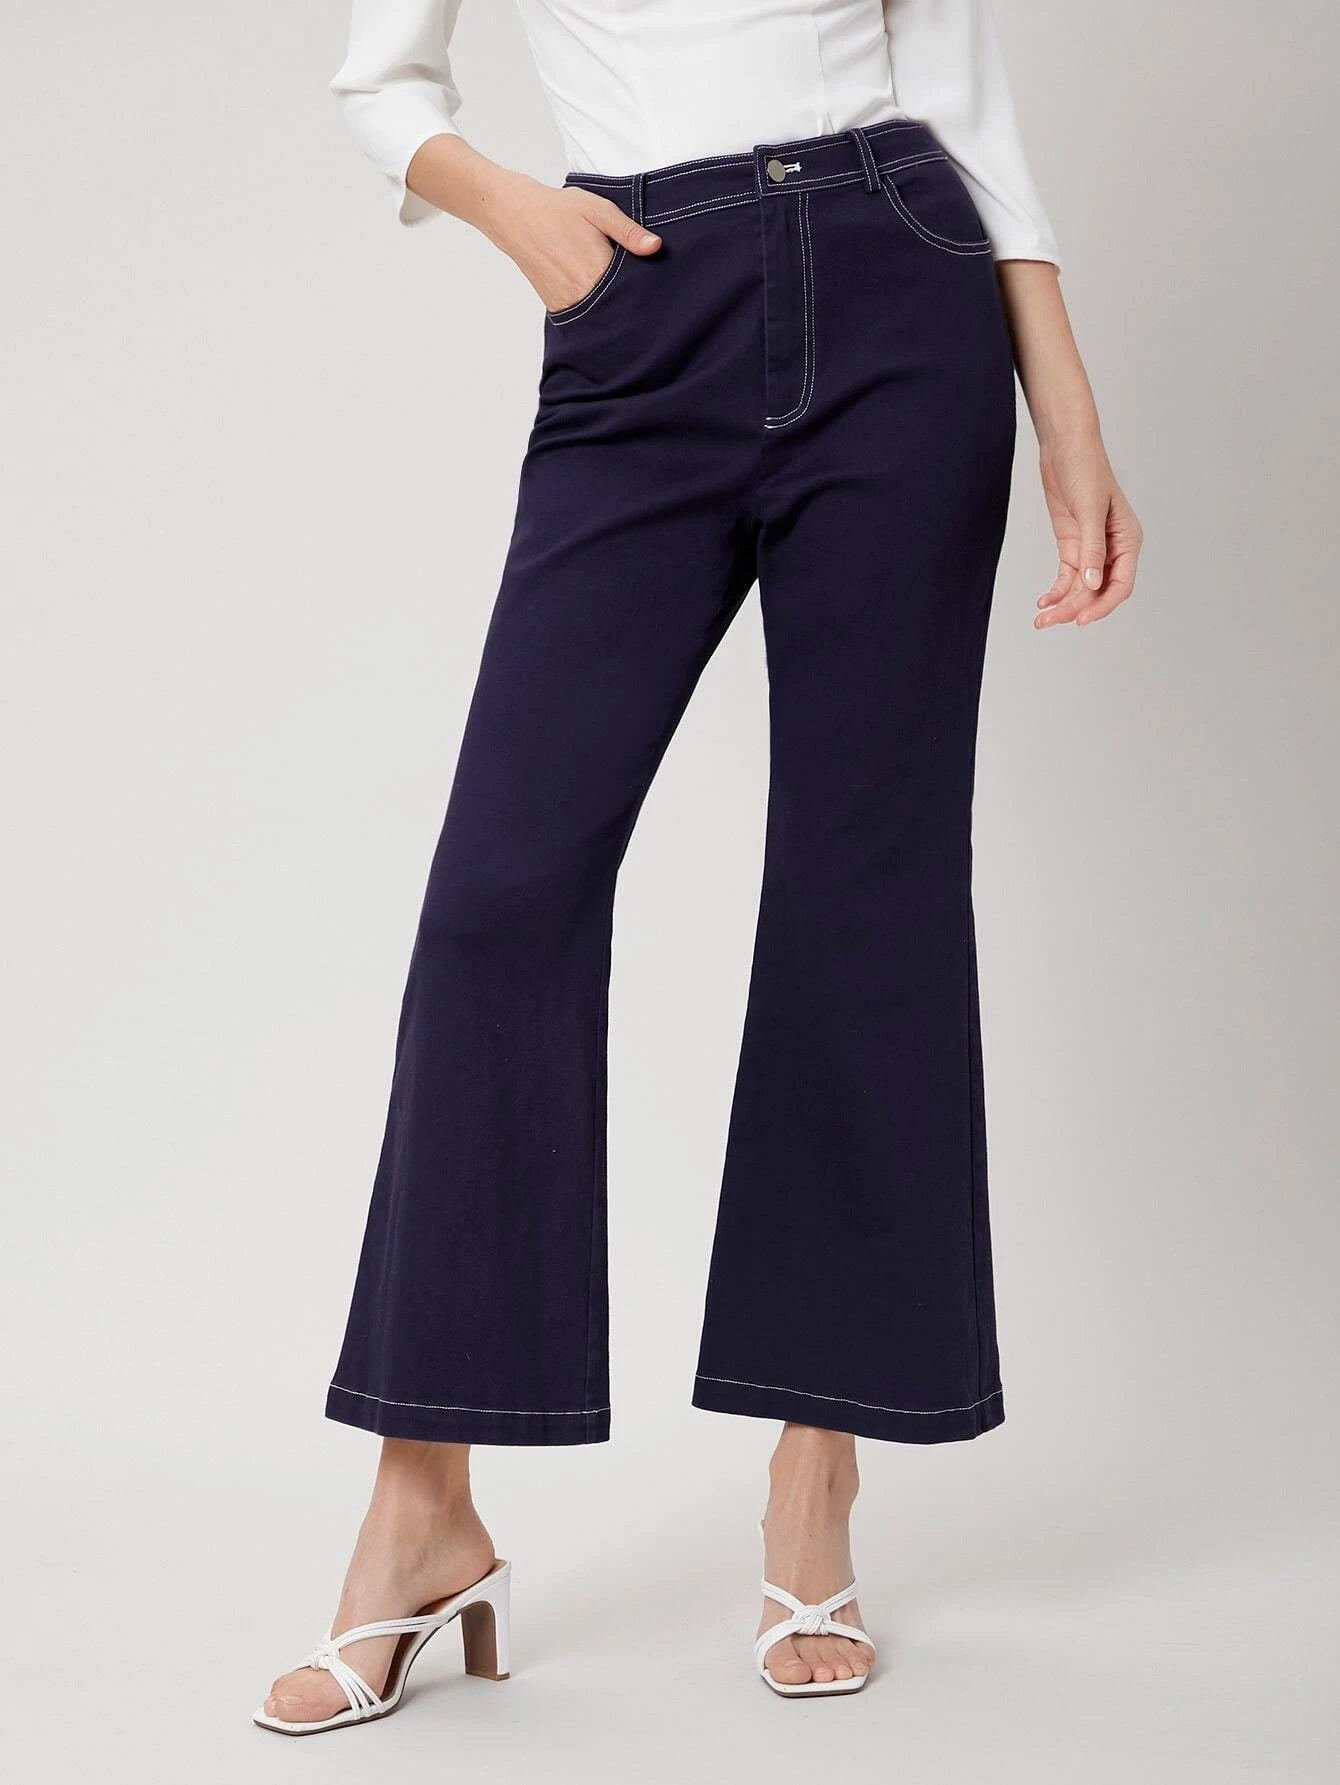 CM-BS323711 Women Elegant Seoul Style High Waist Cotton Blend Flare Leg Pants - Navy Blue